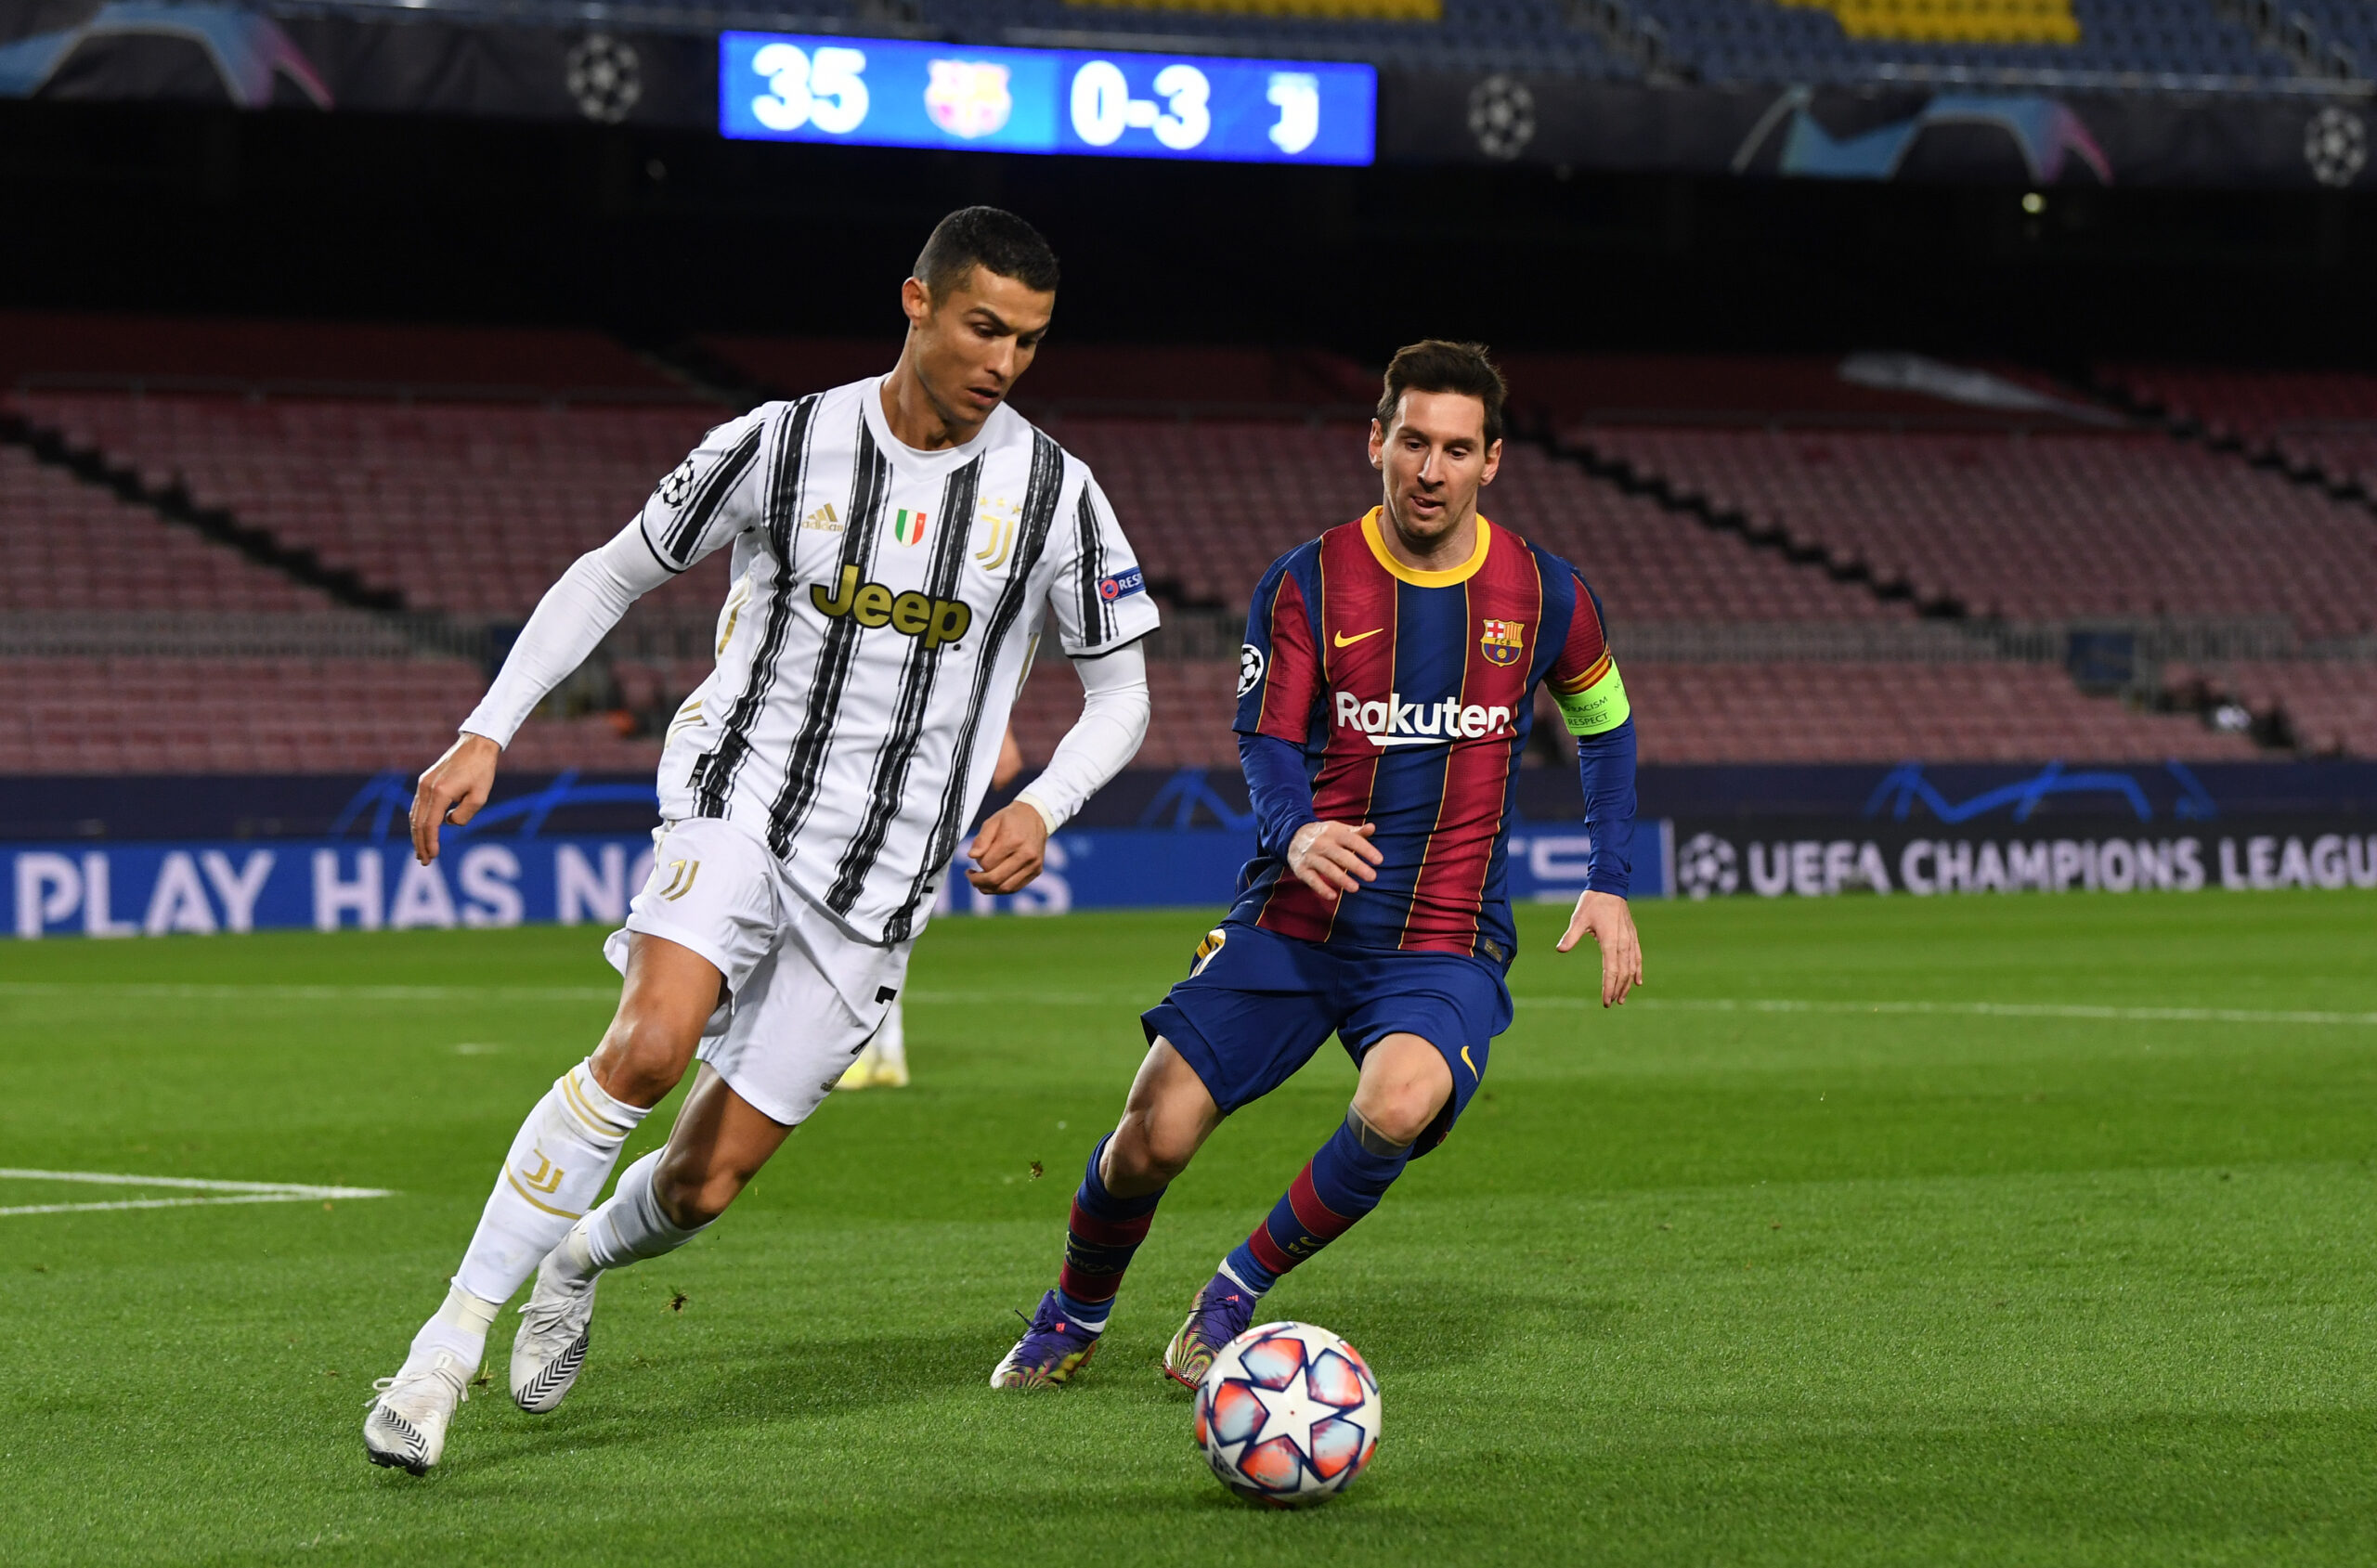 Cristiano Ronaldo und Lionel Messi auf dem Fußballfeld